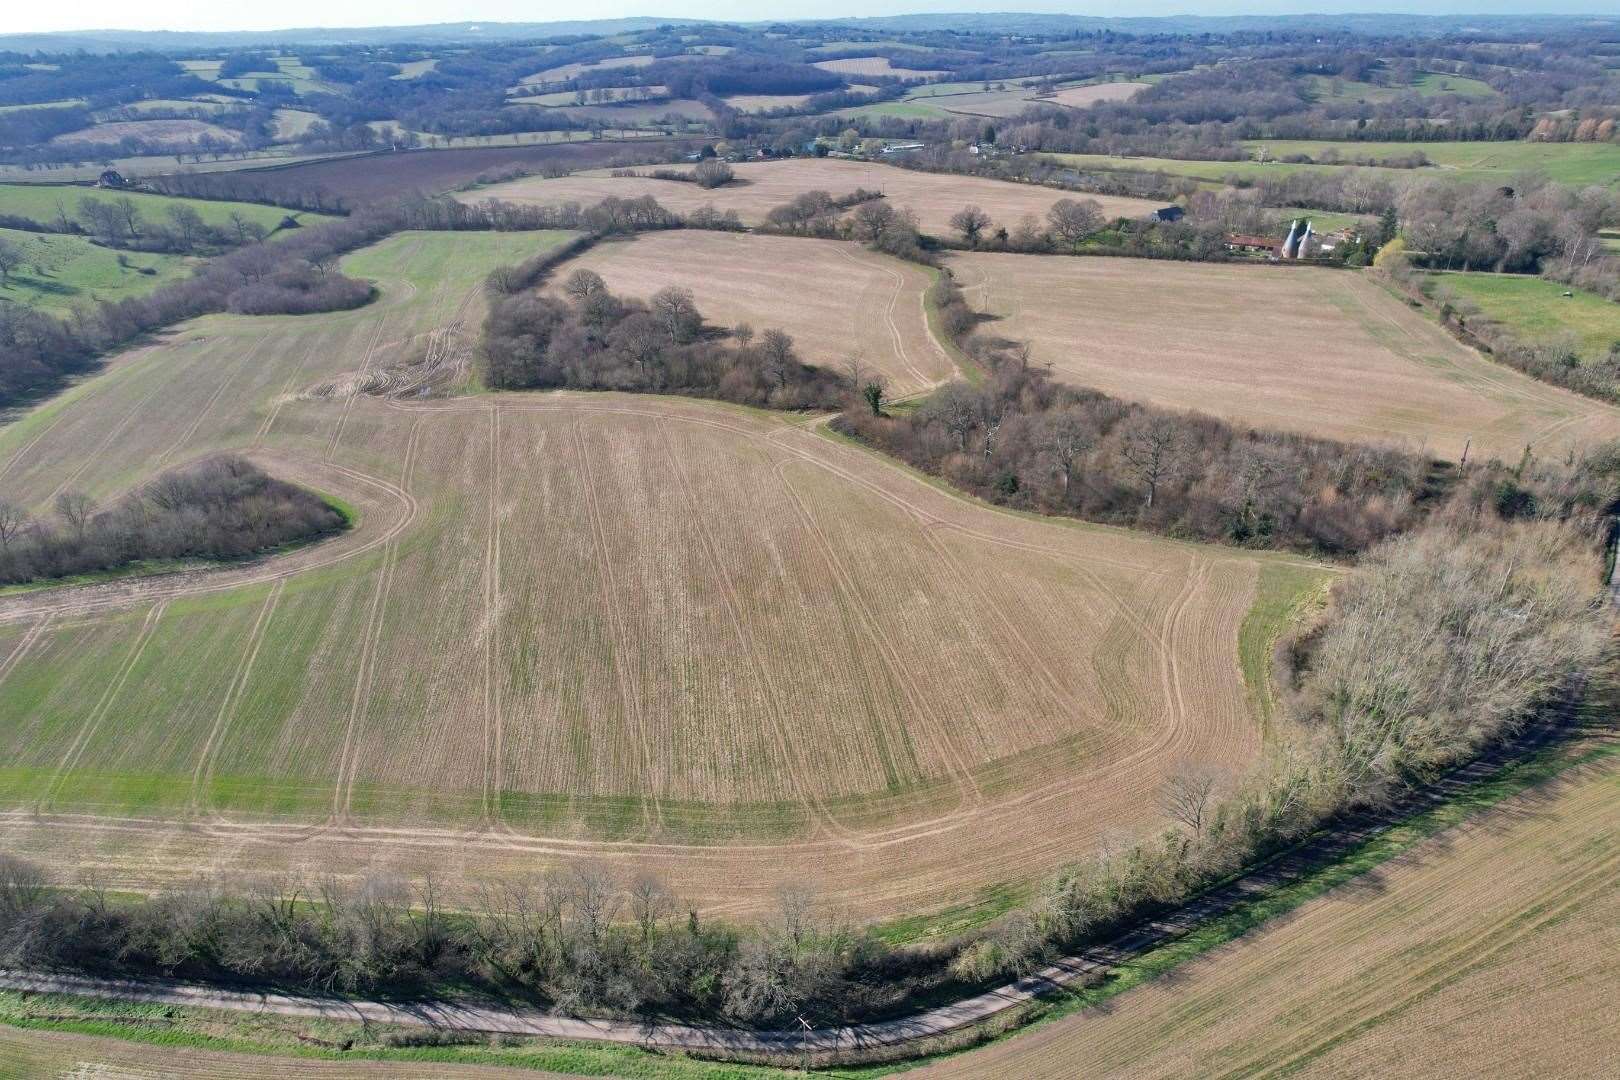 94 acres are available at East Heath near Hawkhurst